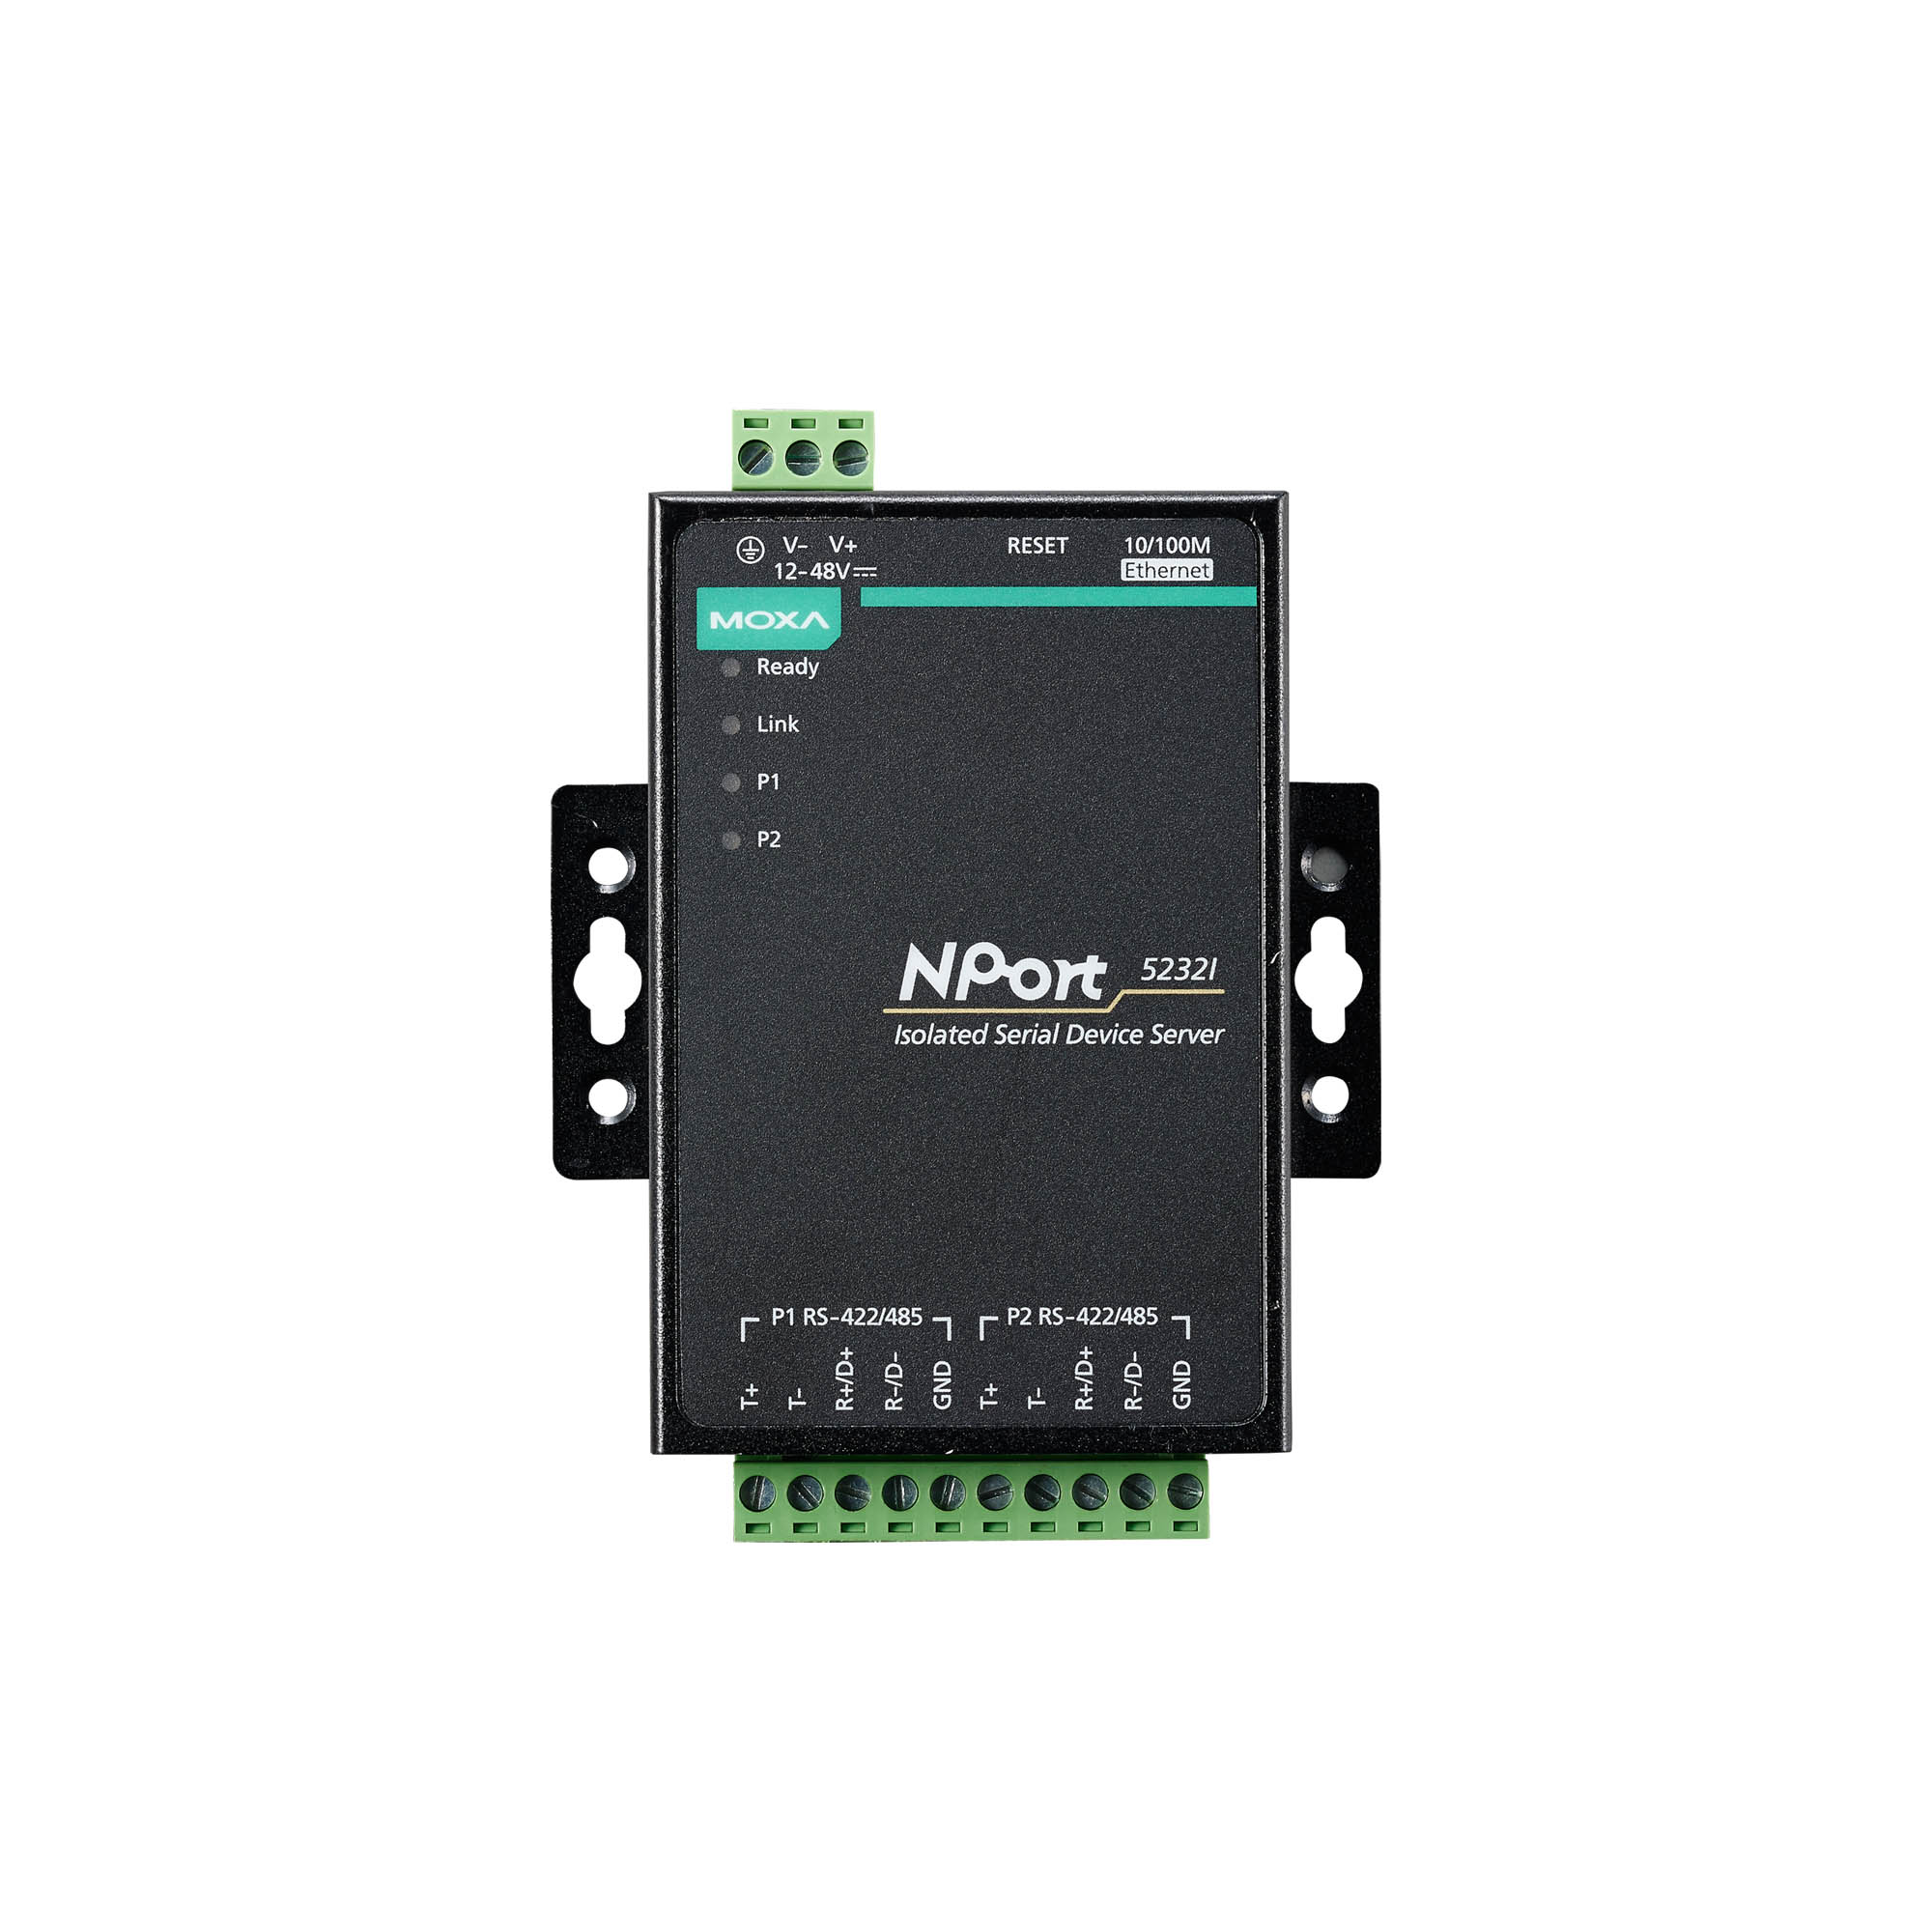 NPort 5200シリーズ - 汎用デバイスサーバー | MOXA